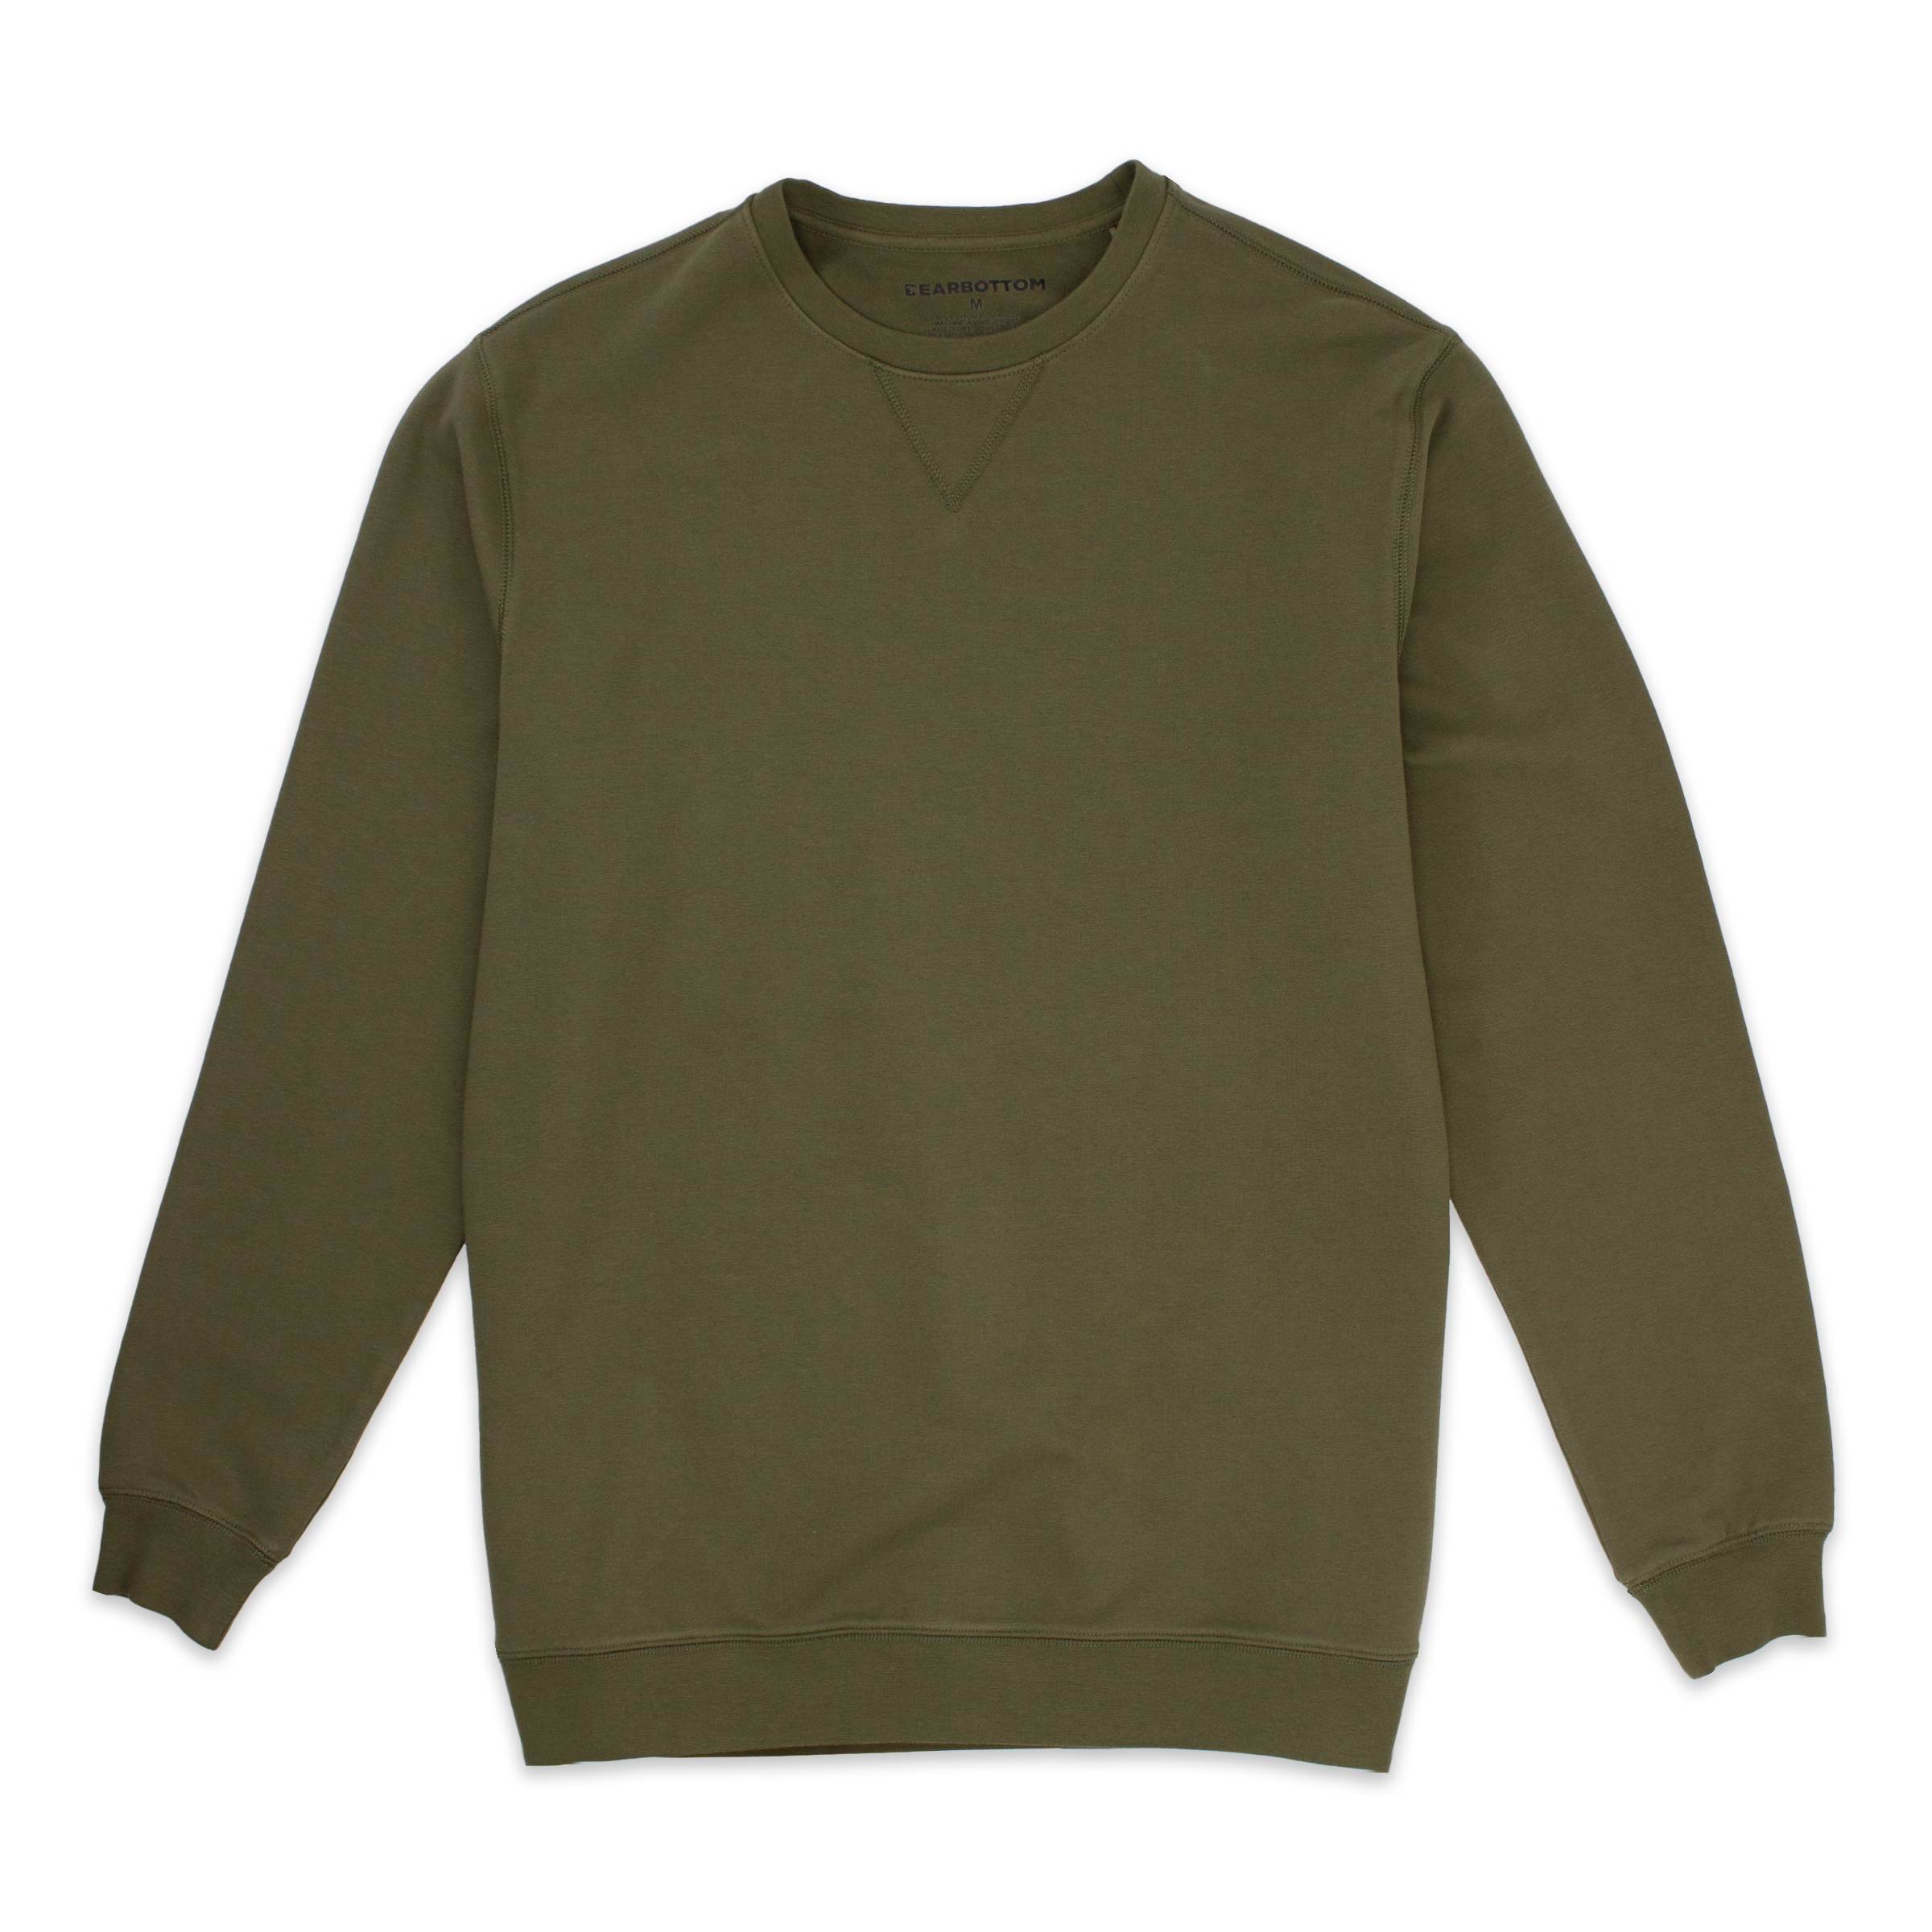 Loft Crewneck sweatshirt in Dark Olive with V-stich, ribbed cuffs and hem